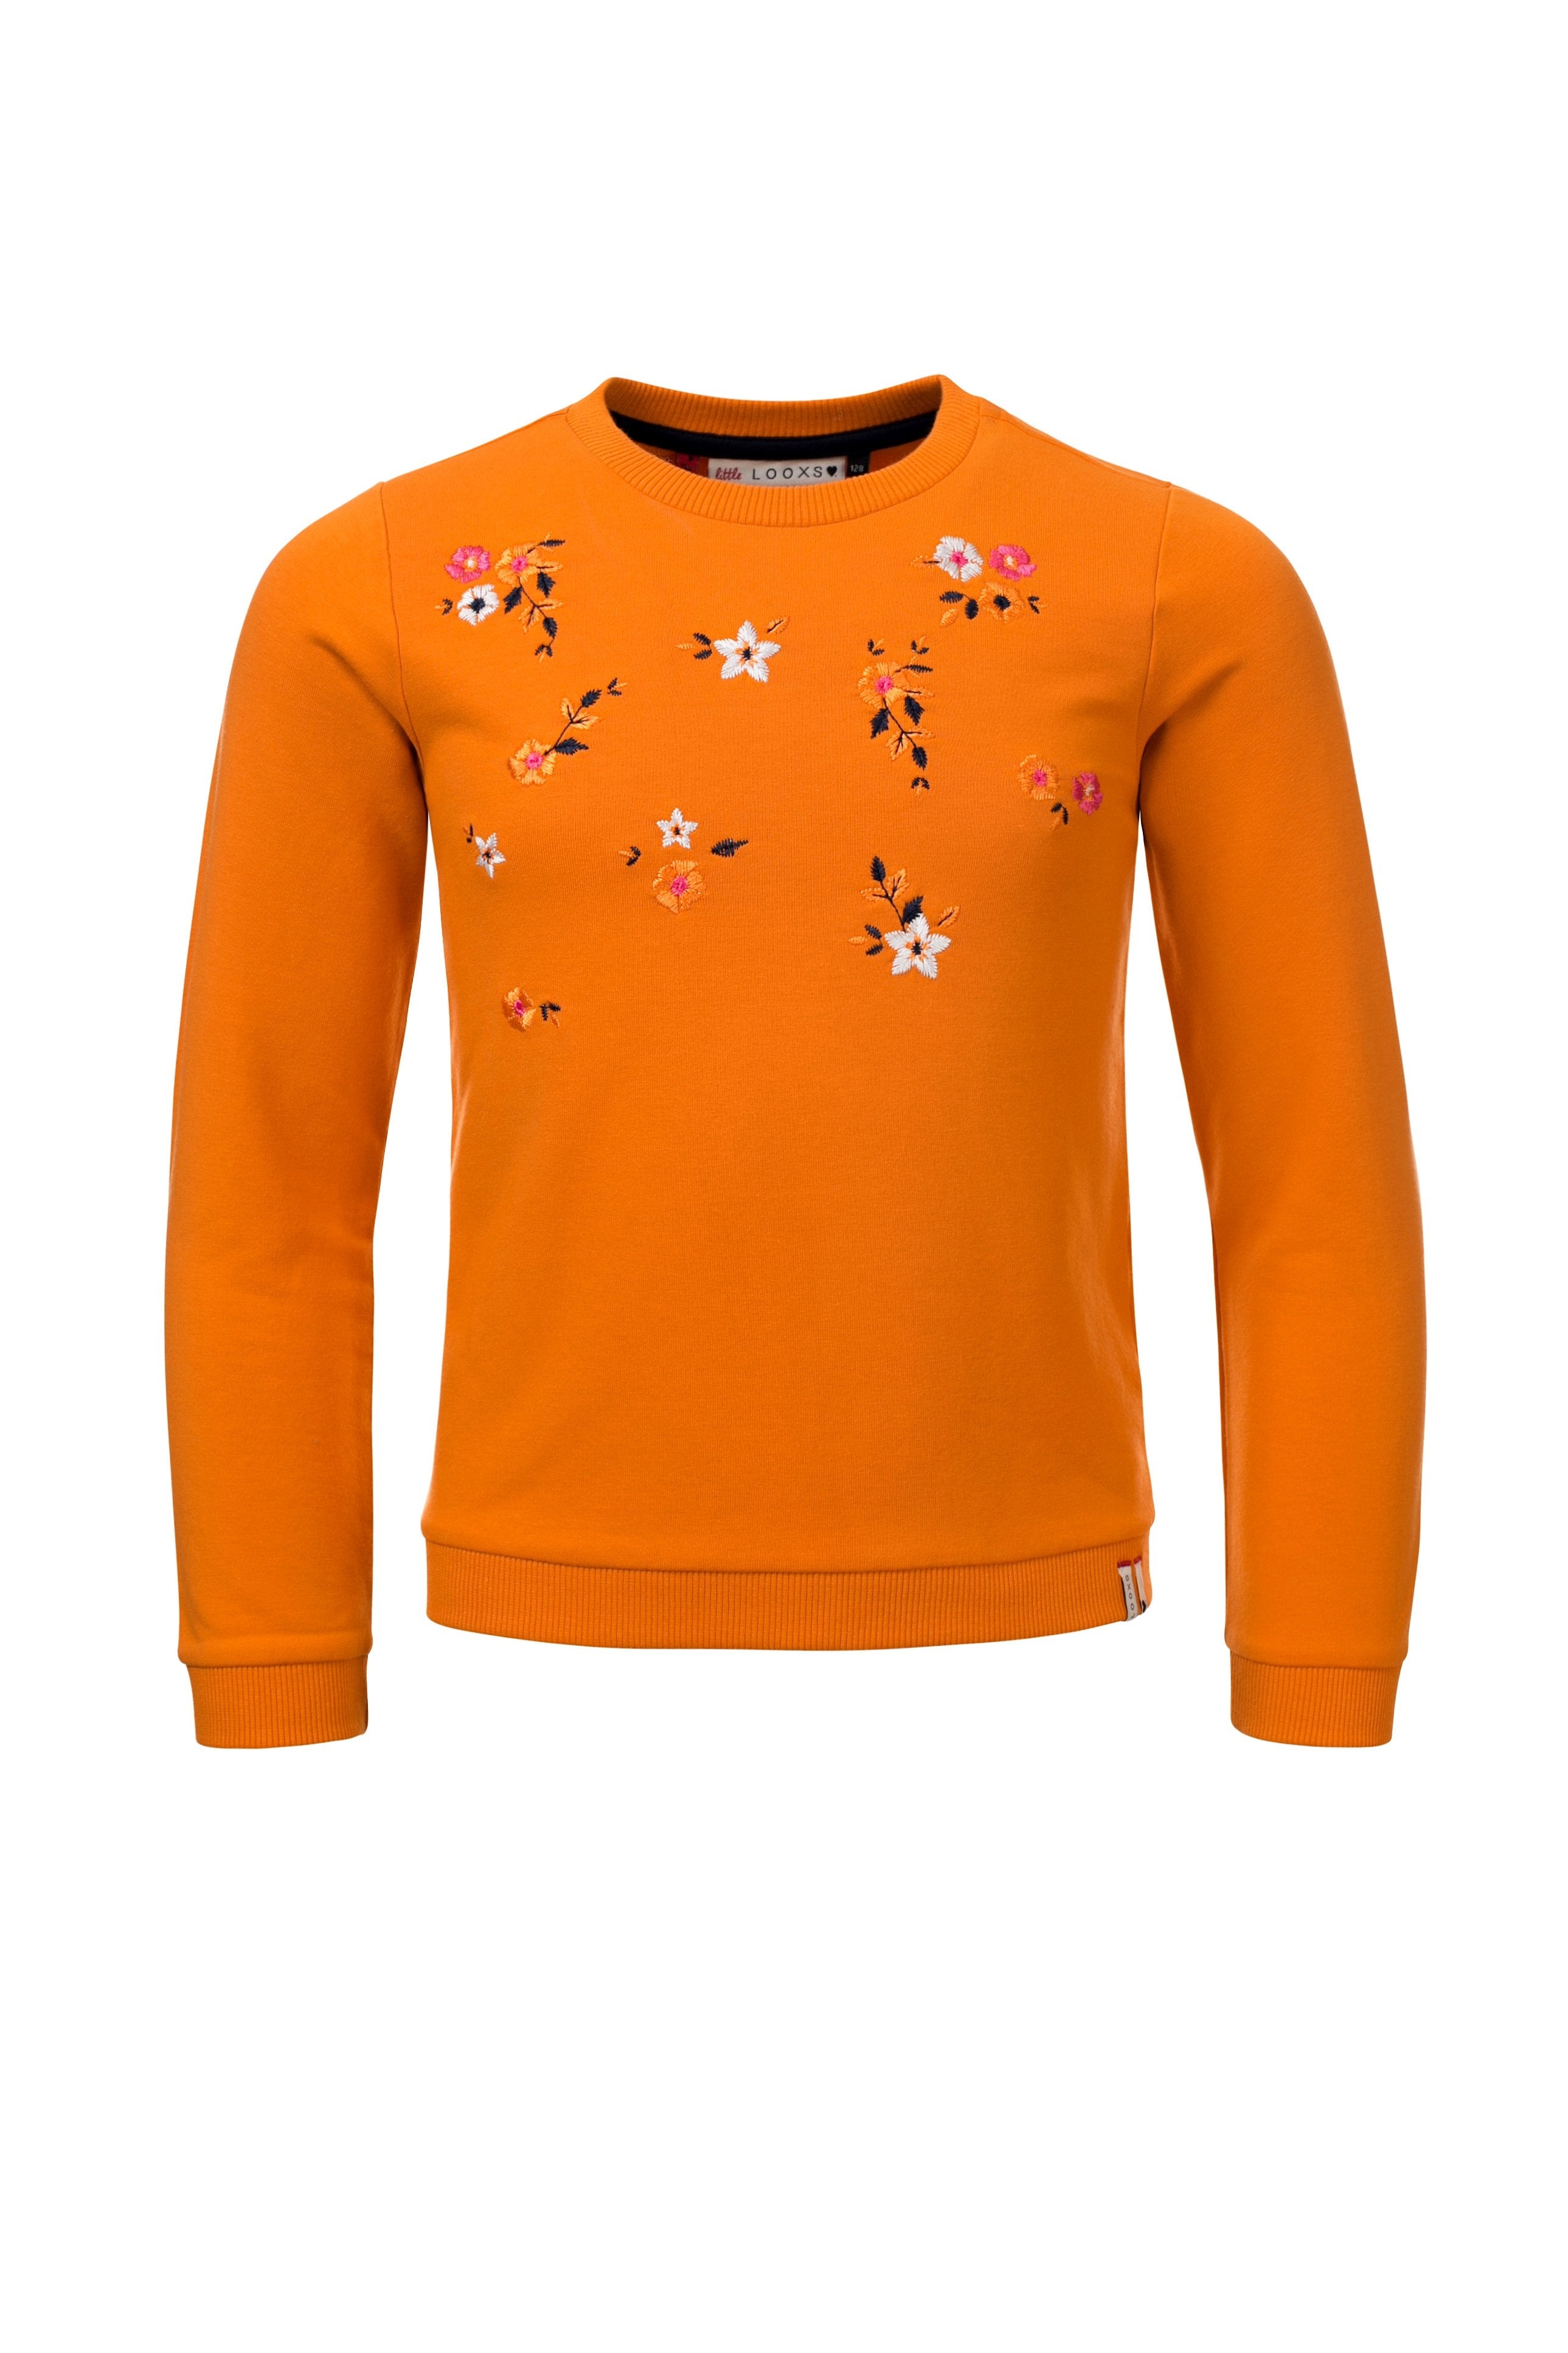 Meisjes Sweater van Little Looxs in de kleur Abricot in maat 128.